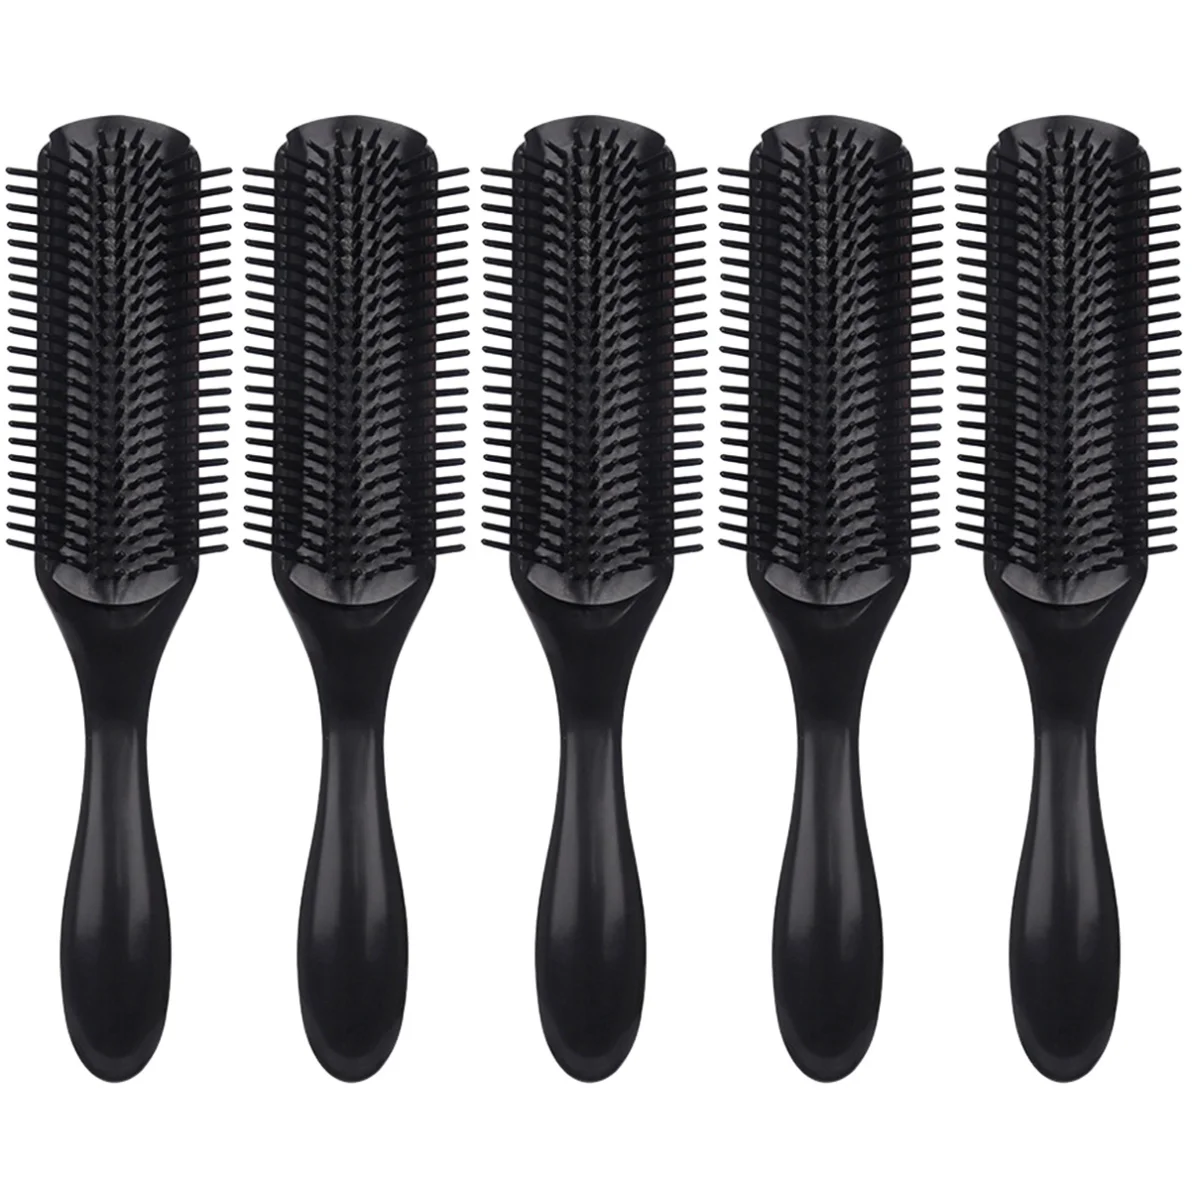 

Set 5 Nine Row Comb Rib Hair Brush Men Curly Styling Tools Hairbrush Curling Abs Thick Detangling Combs Man